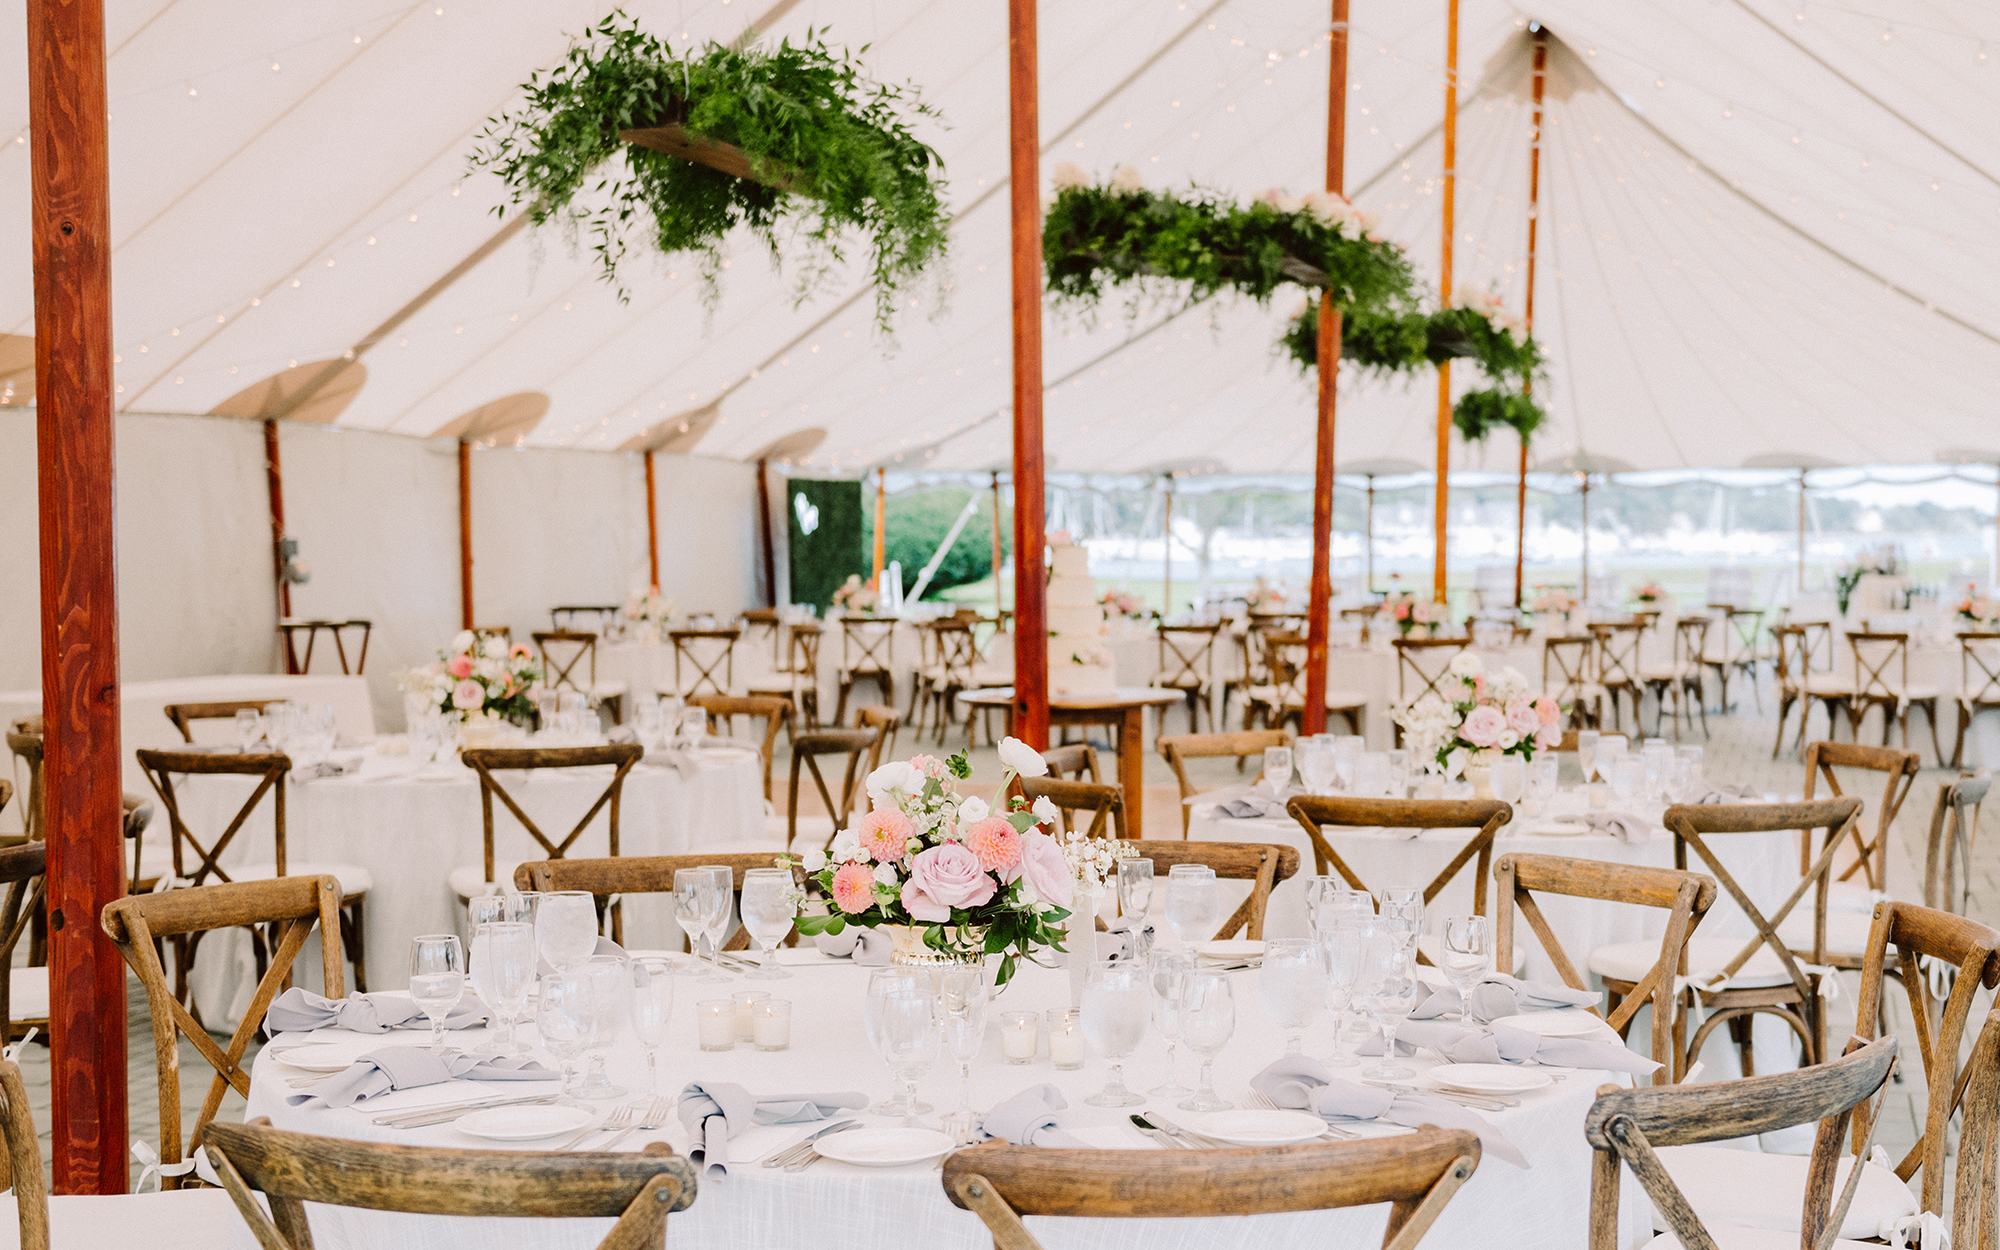 Wedding table settings beneath outdoor tent